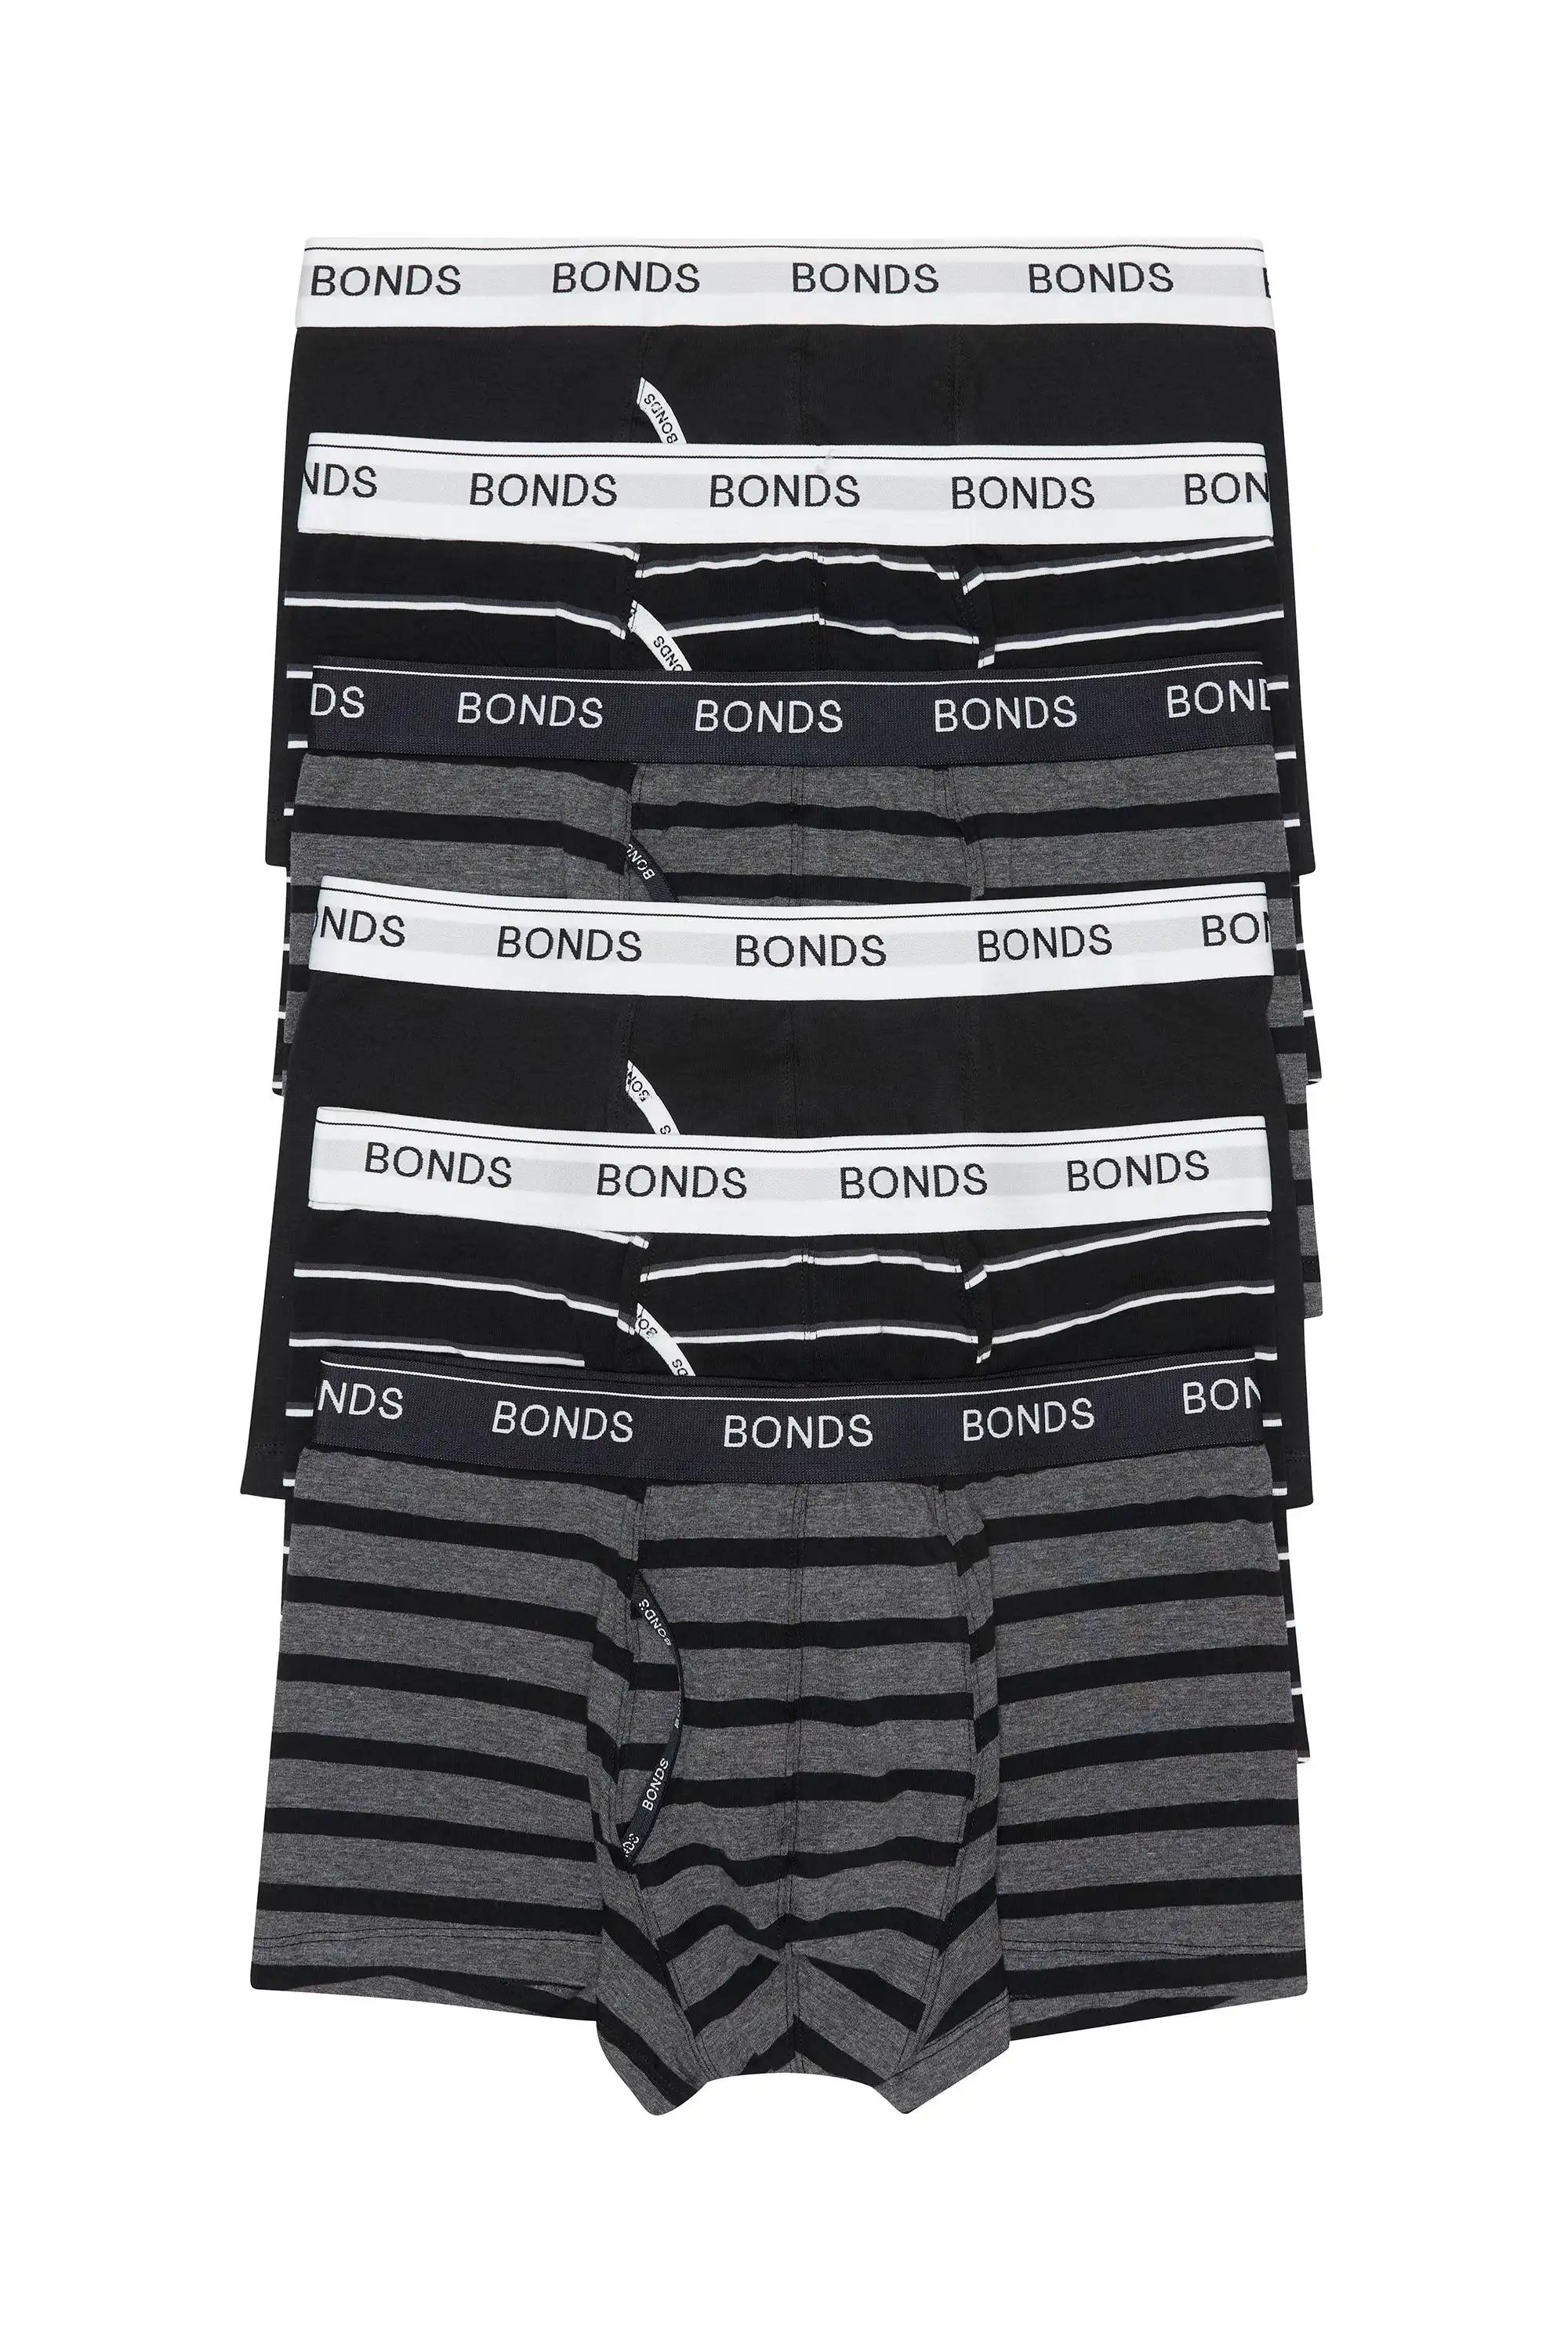 6 x Bonds Mens Guyfront Trunks Underwear Black / Grey Stripe